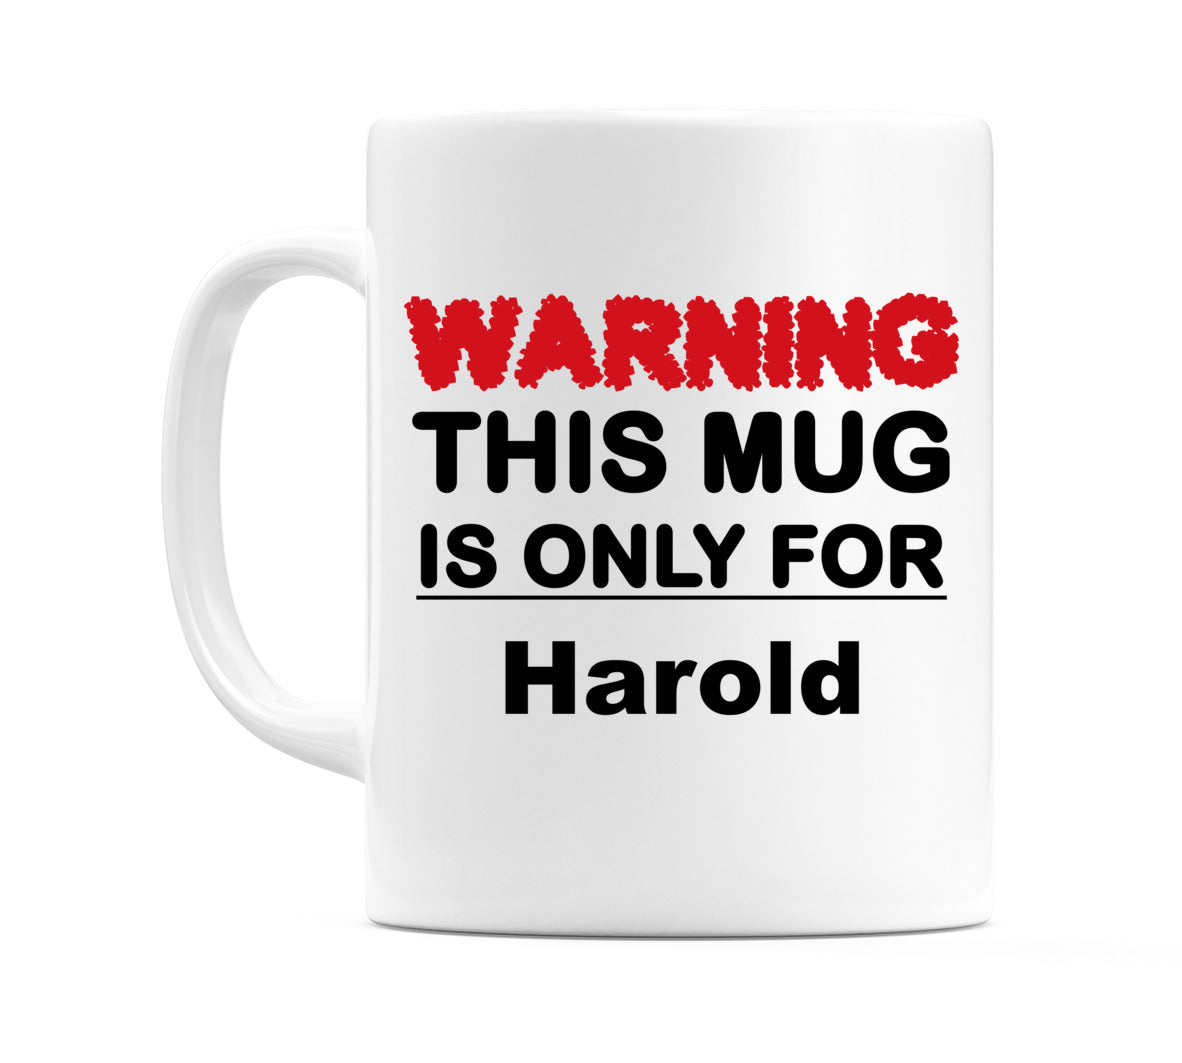 Warning This Mug is ONLY for Harold Mug